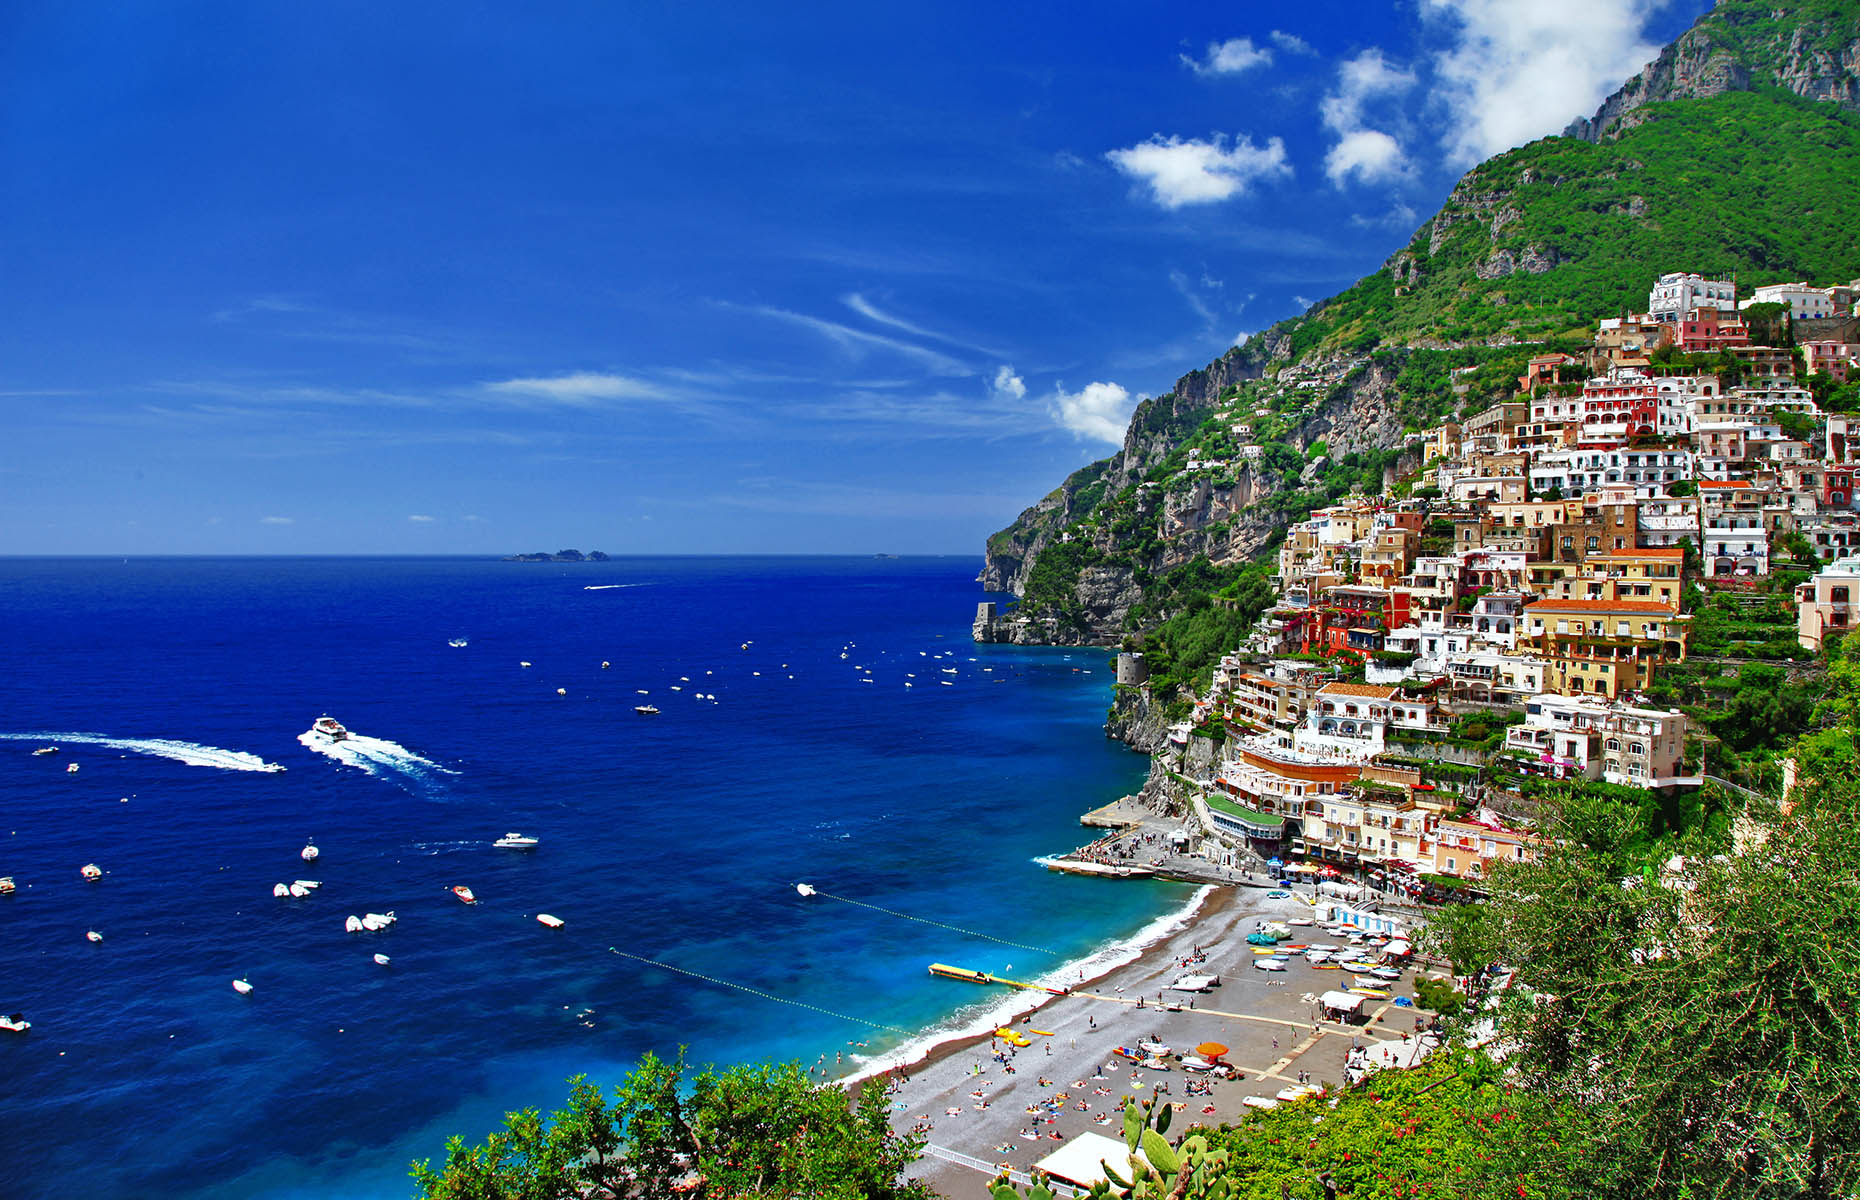 Positano in the Amalfi Coast (Image: leoks/Shutterstock)